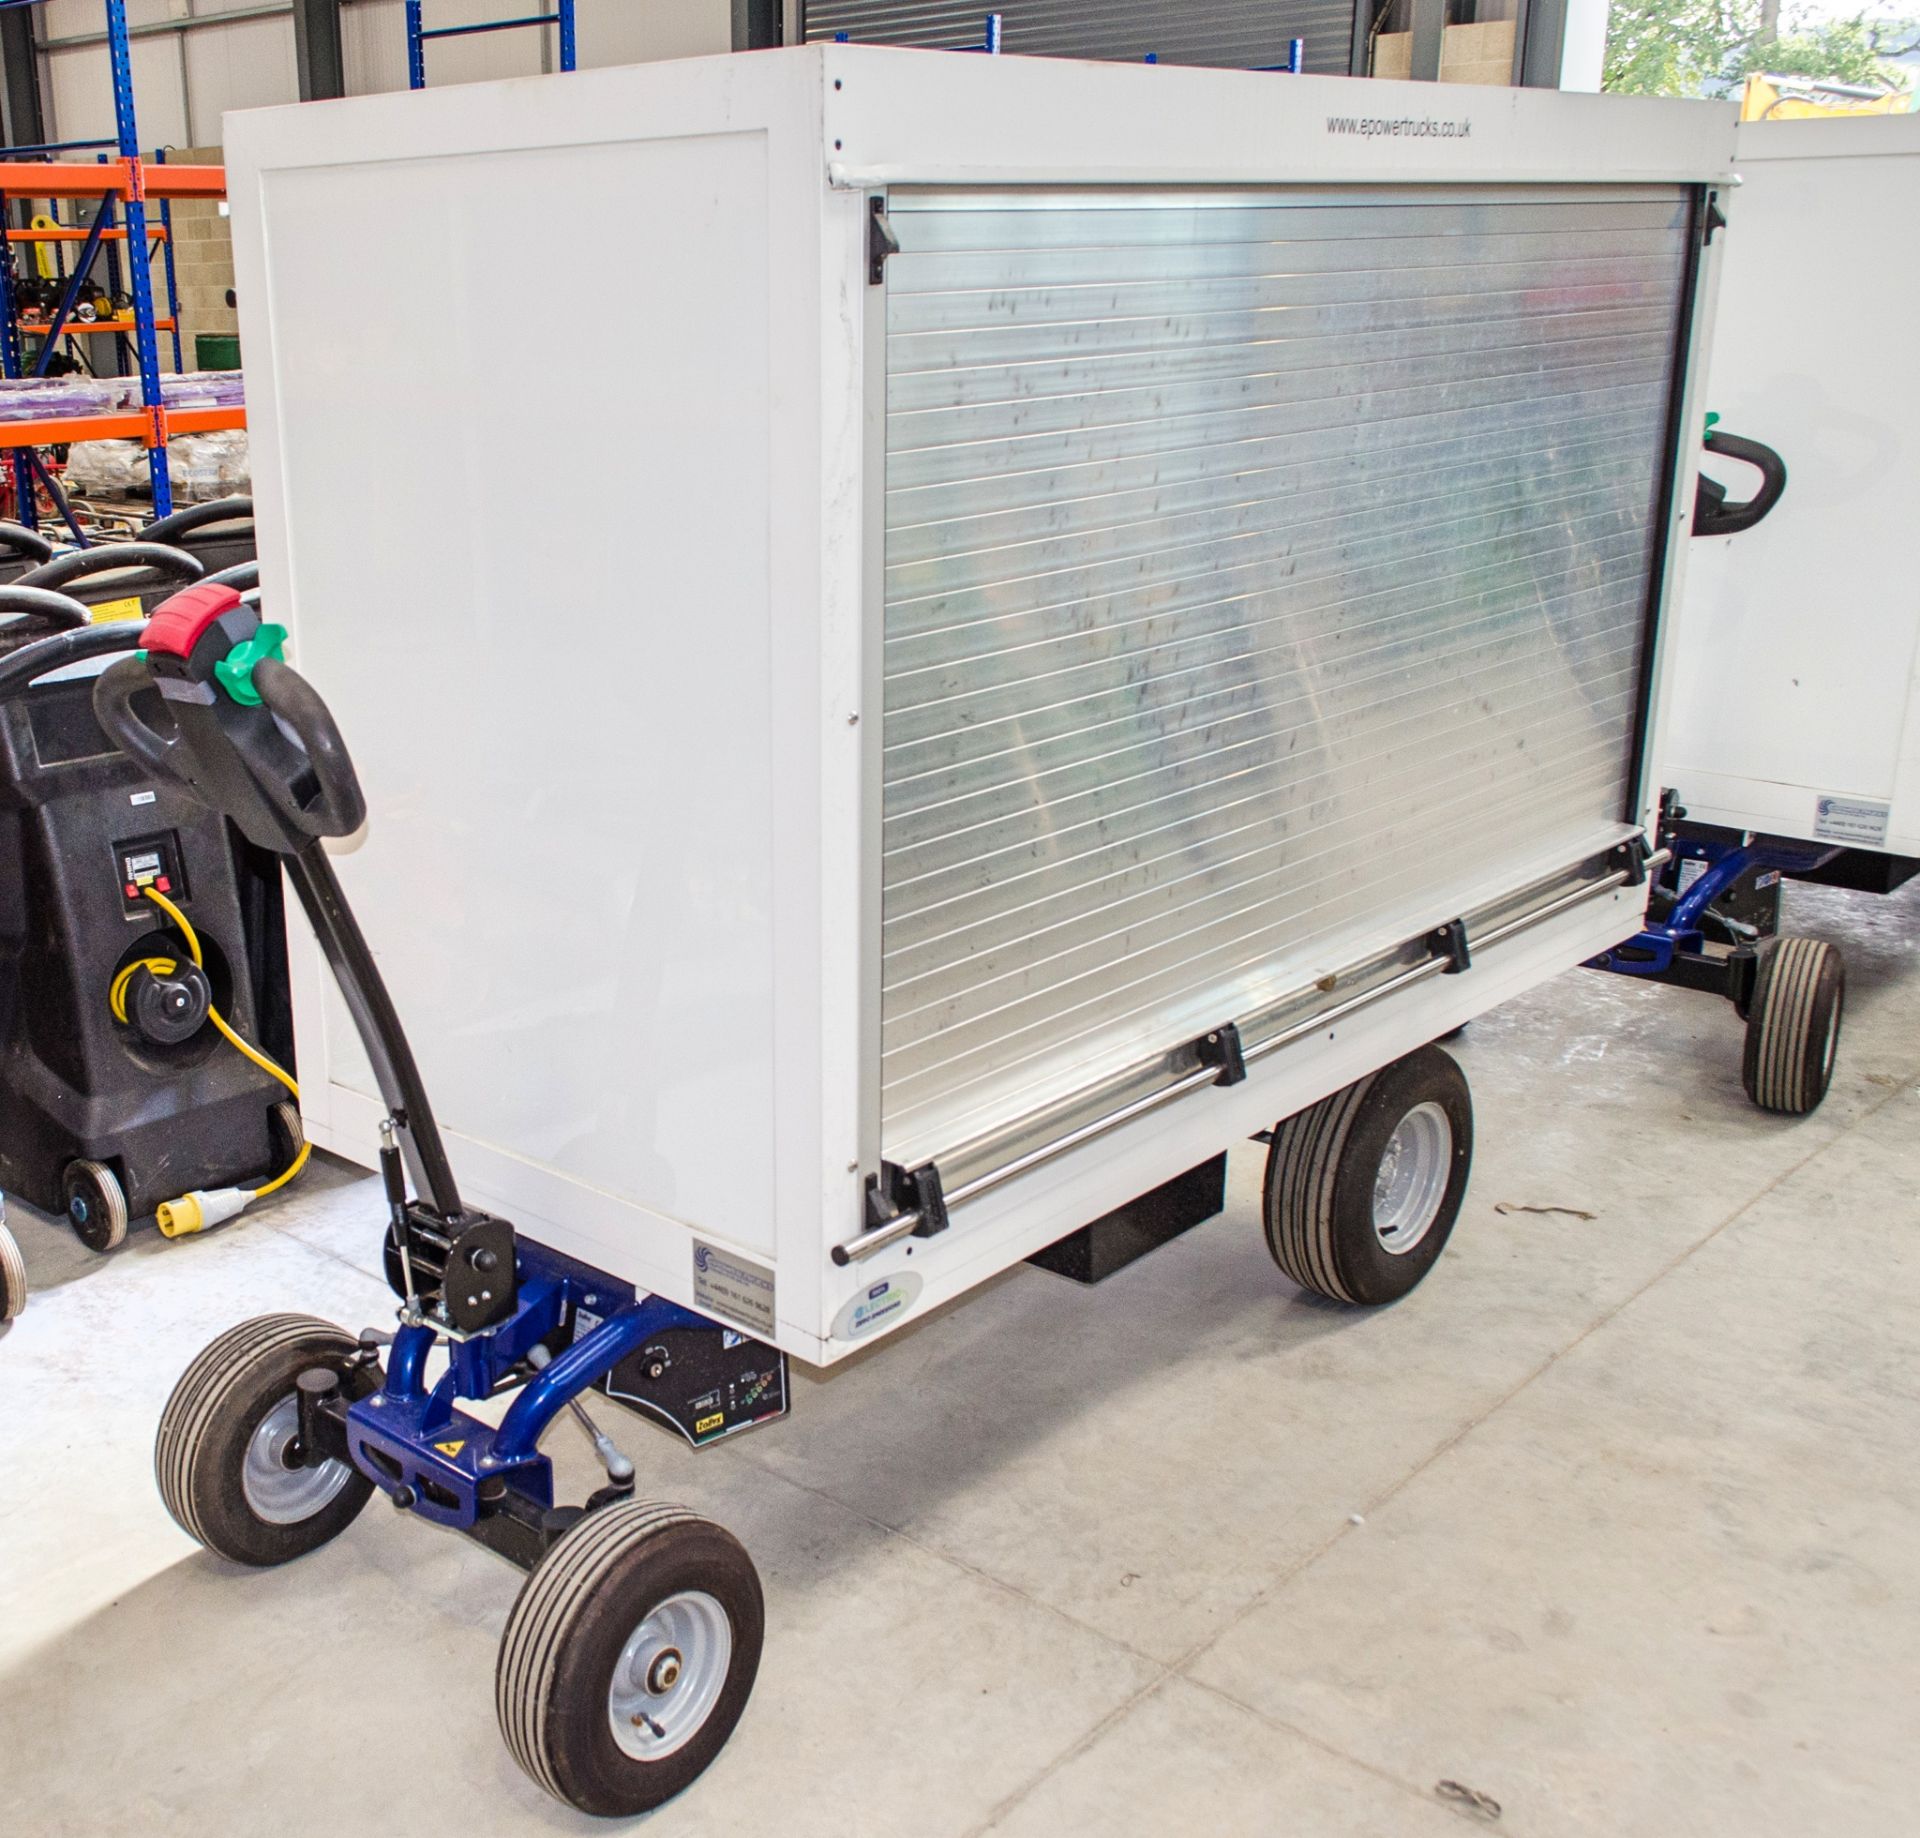 Zallys battery electric 4 wheel roller shutter cart Year: 2019 c/w battery charger